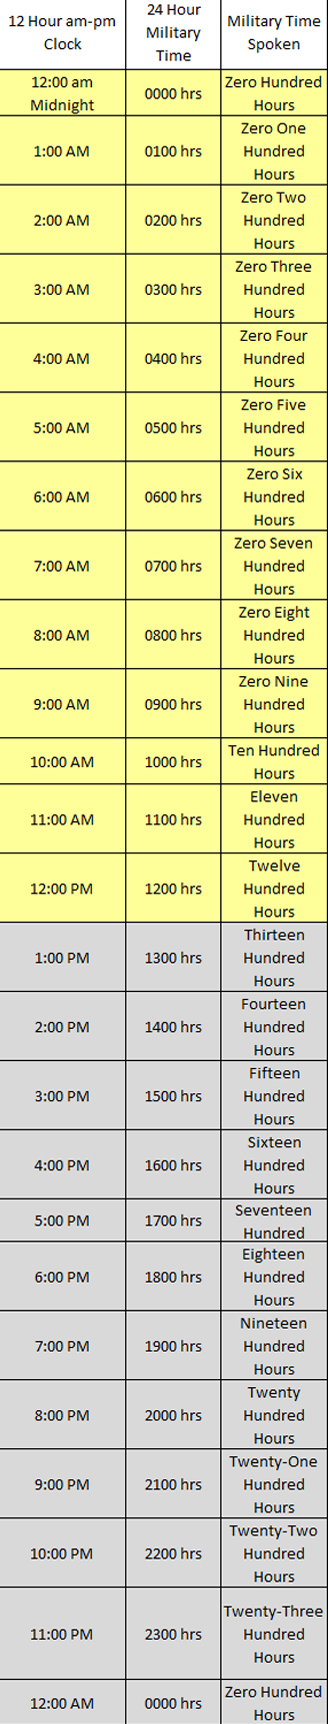 12 Hour time clock vs. 24 hour military time clock